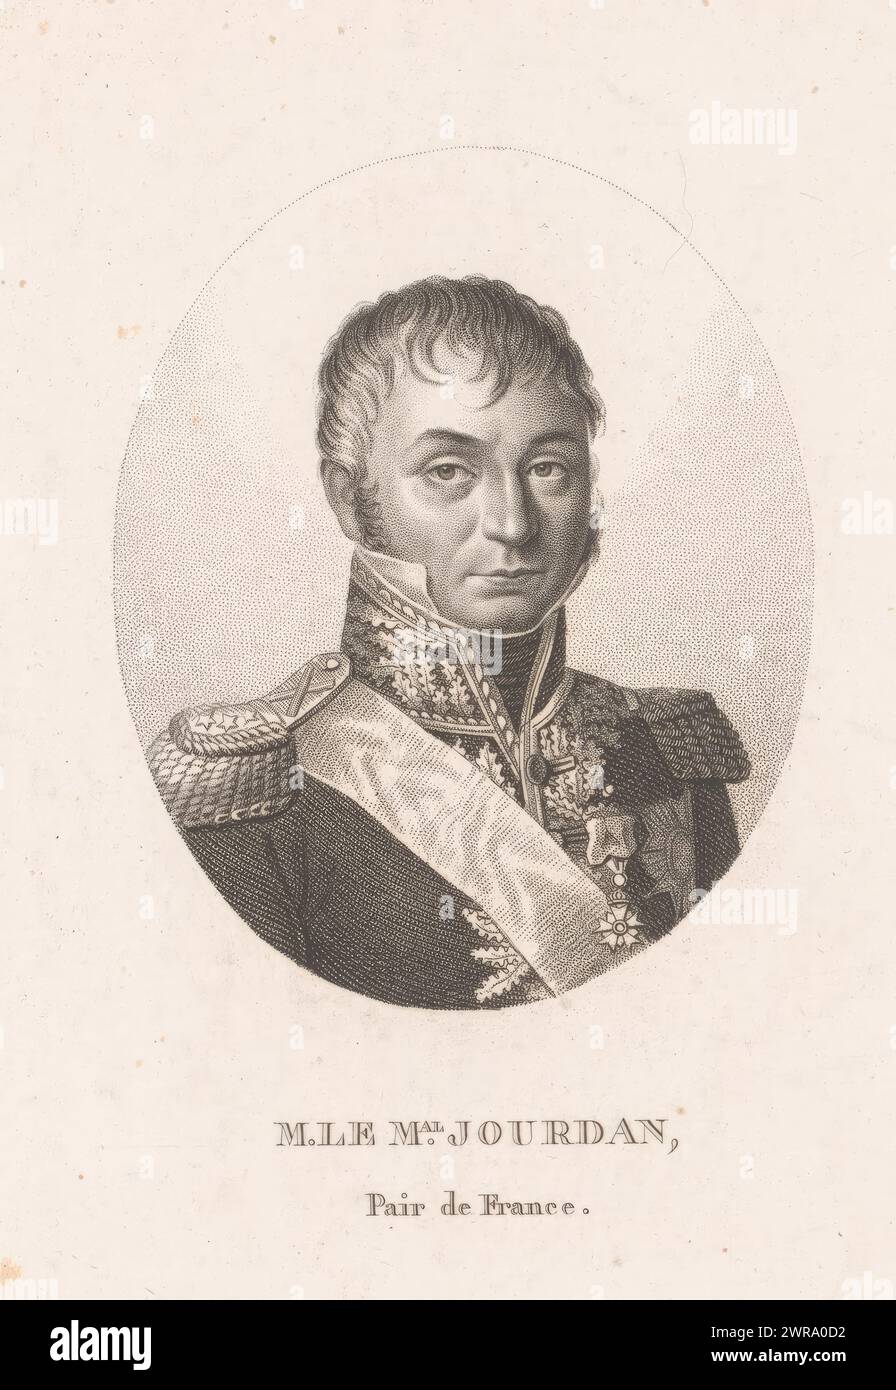 Portrait of Jean-Baptiste Jourdan, print maker: Ambroise Tardieu, Paris, 1820 - 1821, paper, engraving, height 209 mm × width 136 mm, print Stock Photo